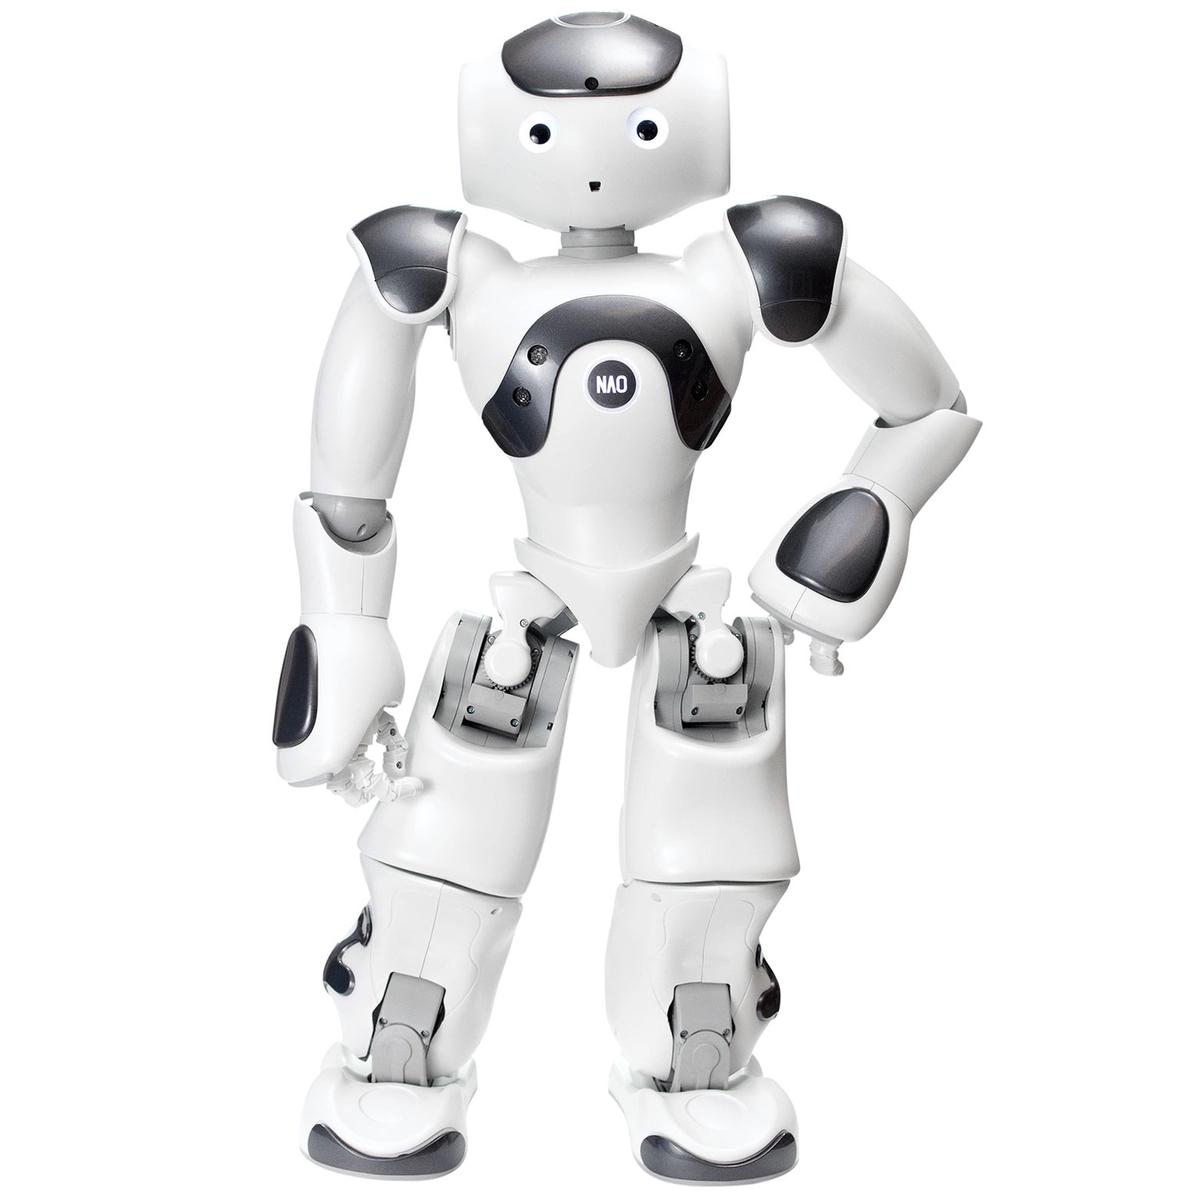 Nao ROBOTS: Your Guide the World of Robotics